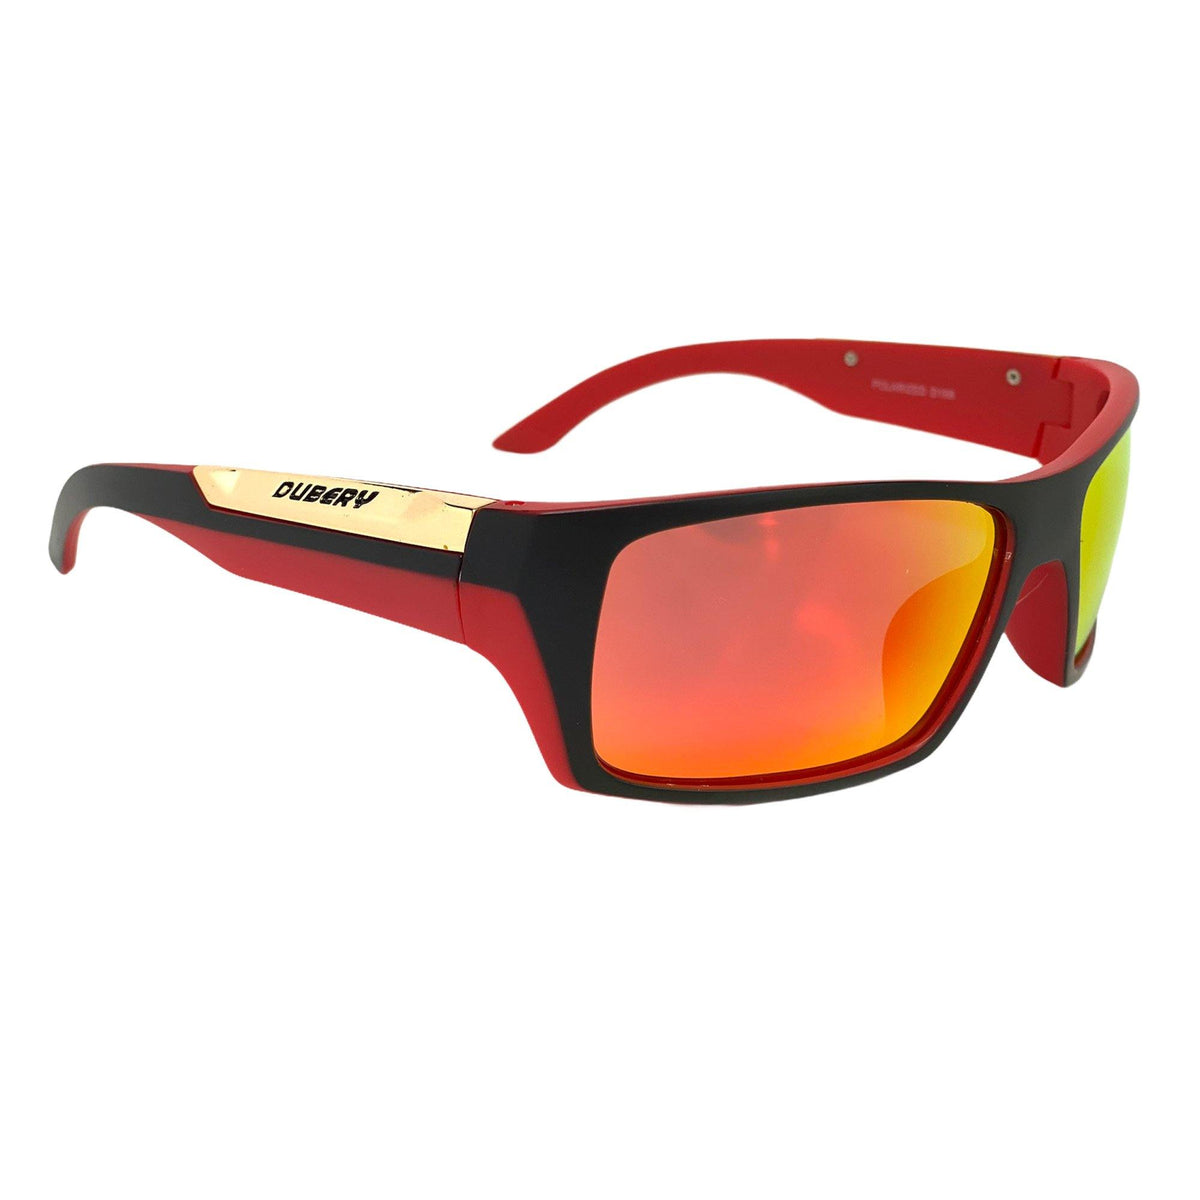 Dubery Sunglasses Website– Dubery Optics Sunglasses